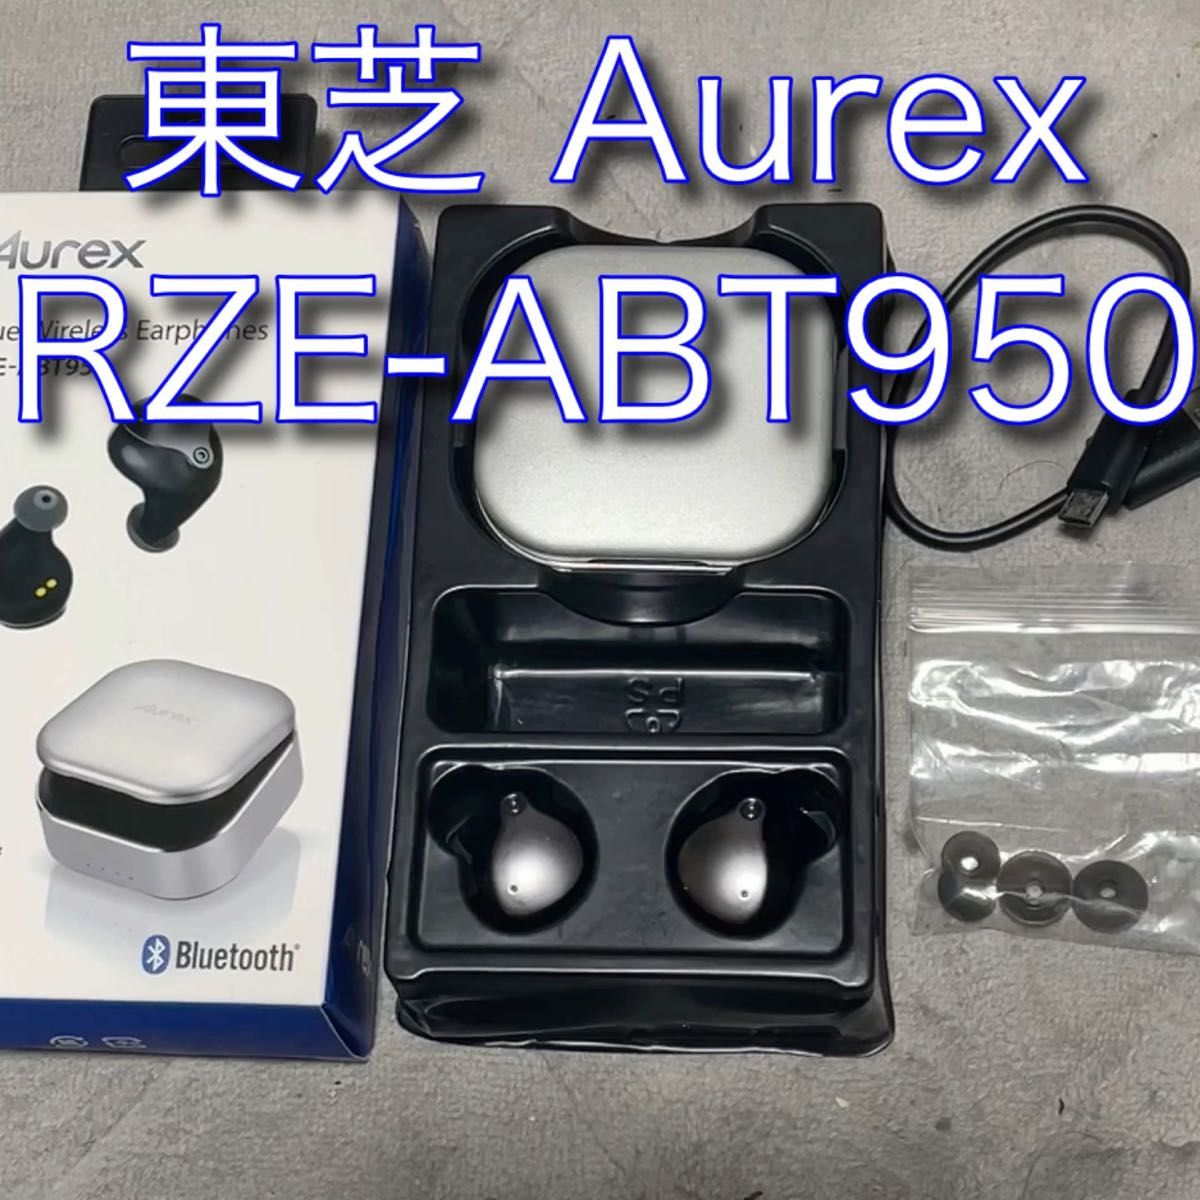 Aurex 完全ワイヤレスイヤホン RZE-ABT950（KM） ガンメタリック